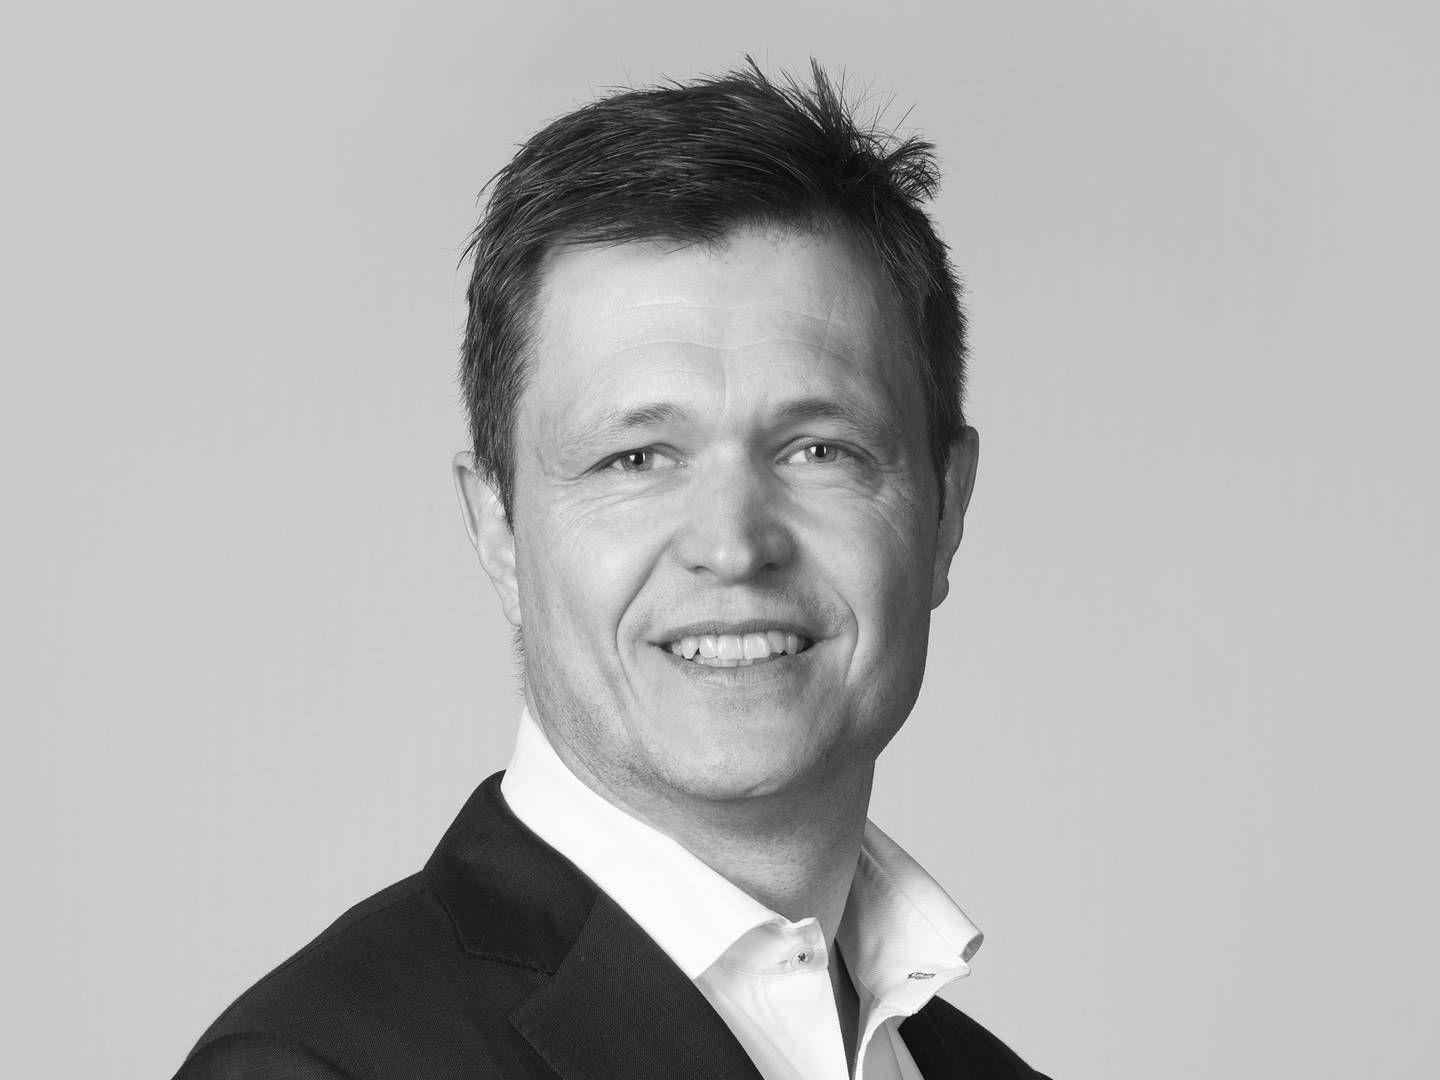 Anders Vadsholt, CEO of Orphazyme | Photo: Orphazyme / PR